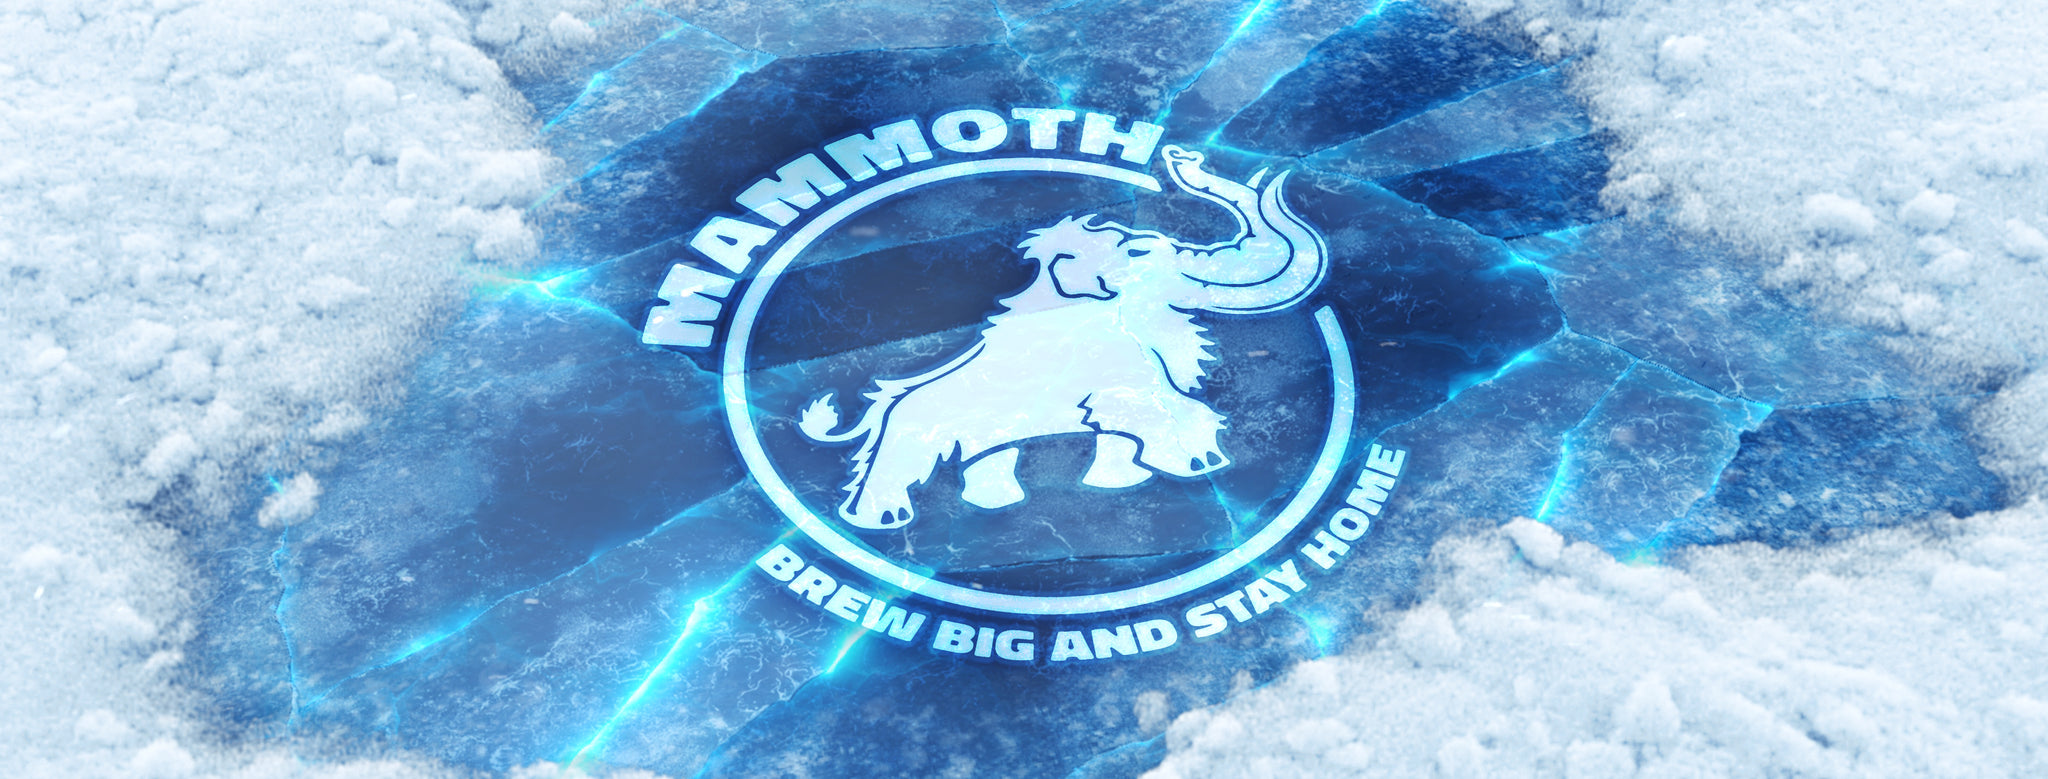 Mammoth Brewing Gear